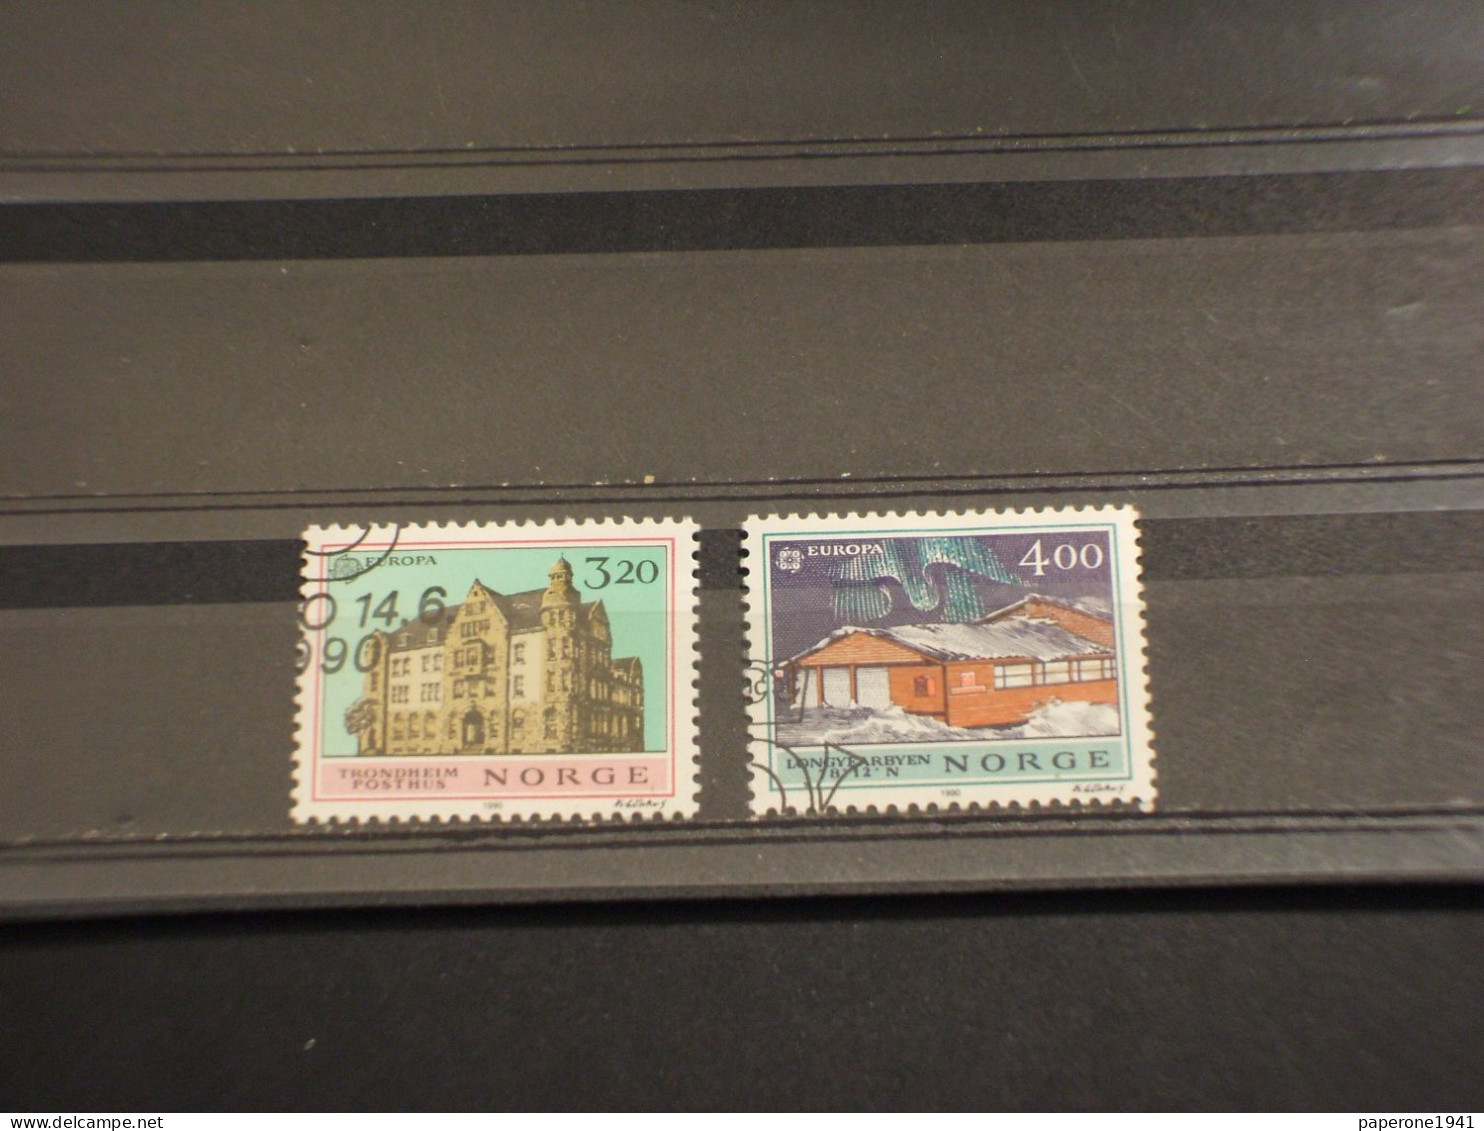 NORVEGIA - 1990 ARCHITETTURA 2 VALORI - TIMBRATI/USED - Used Stamps